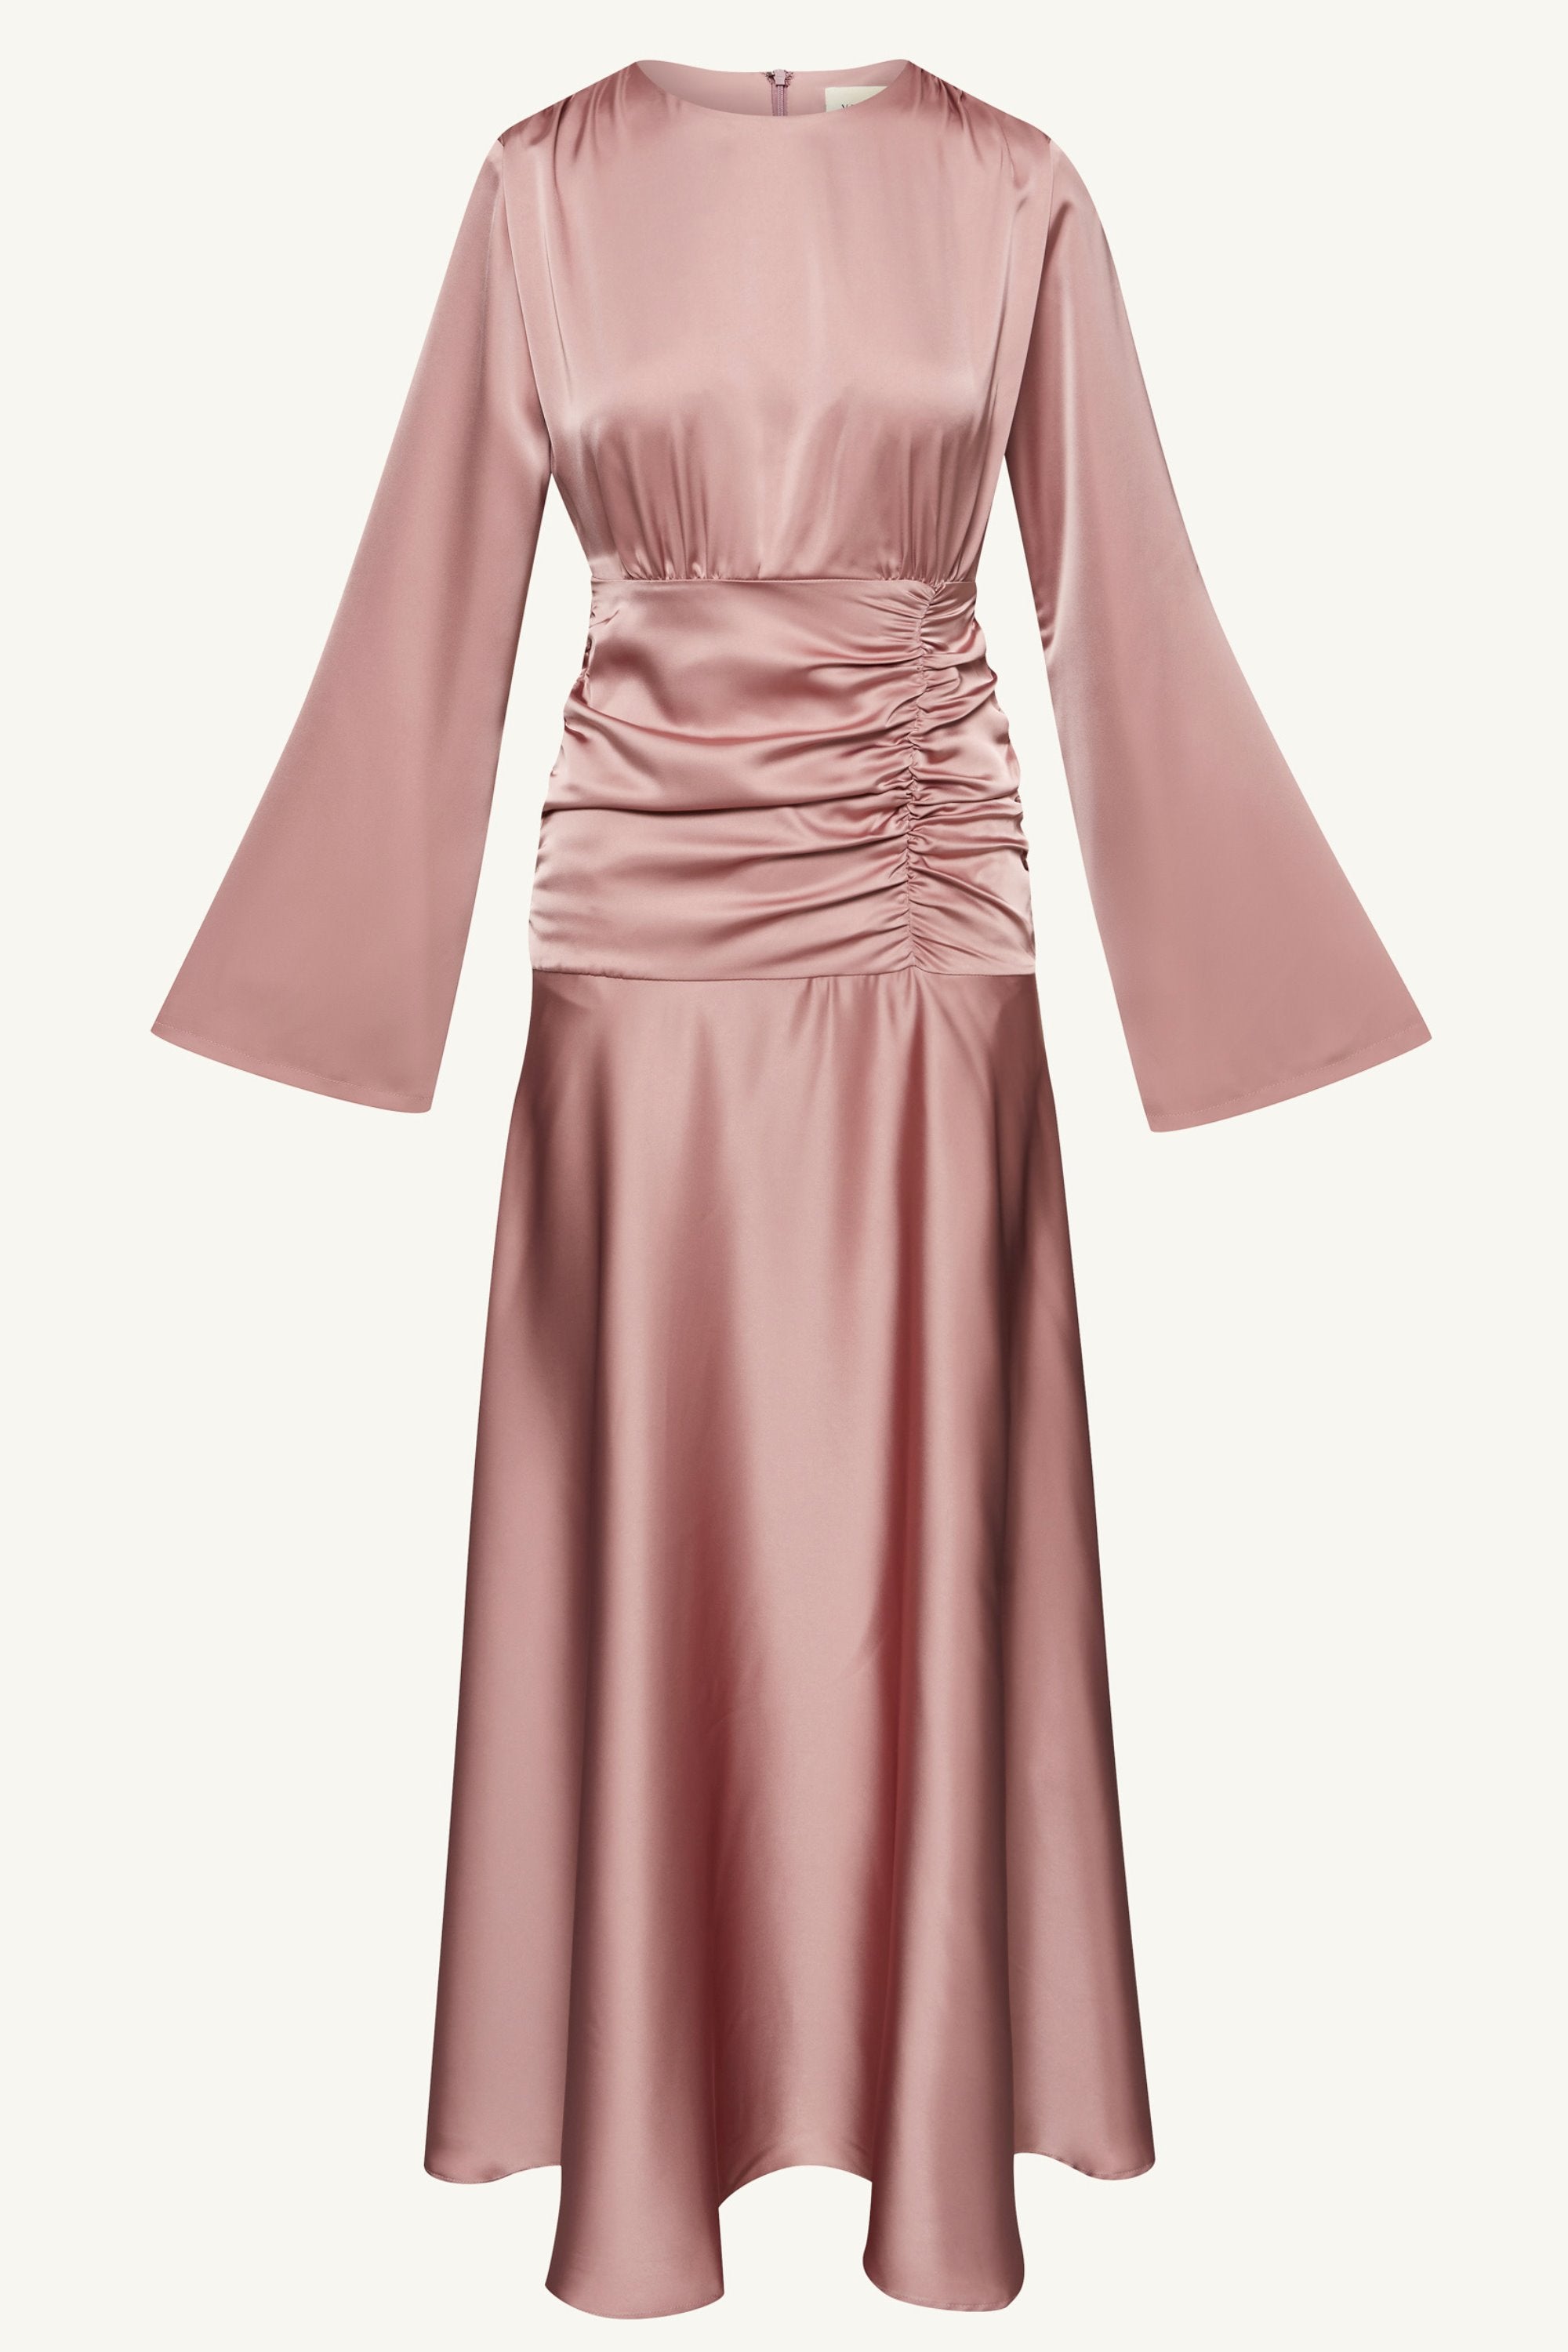 Shams Satin Side Rouched Maxi Dress - Dusty Rose Clothing epschoolboard 